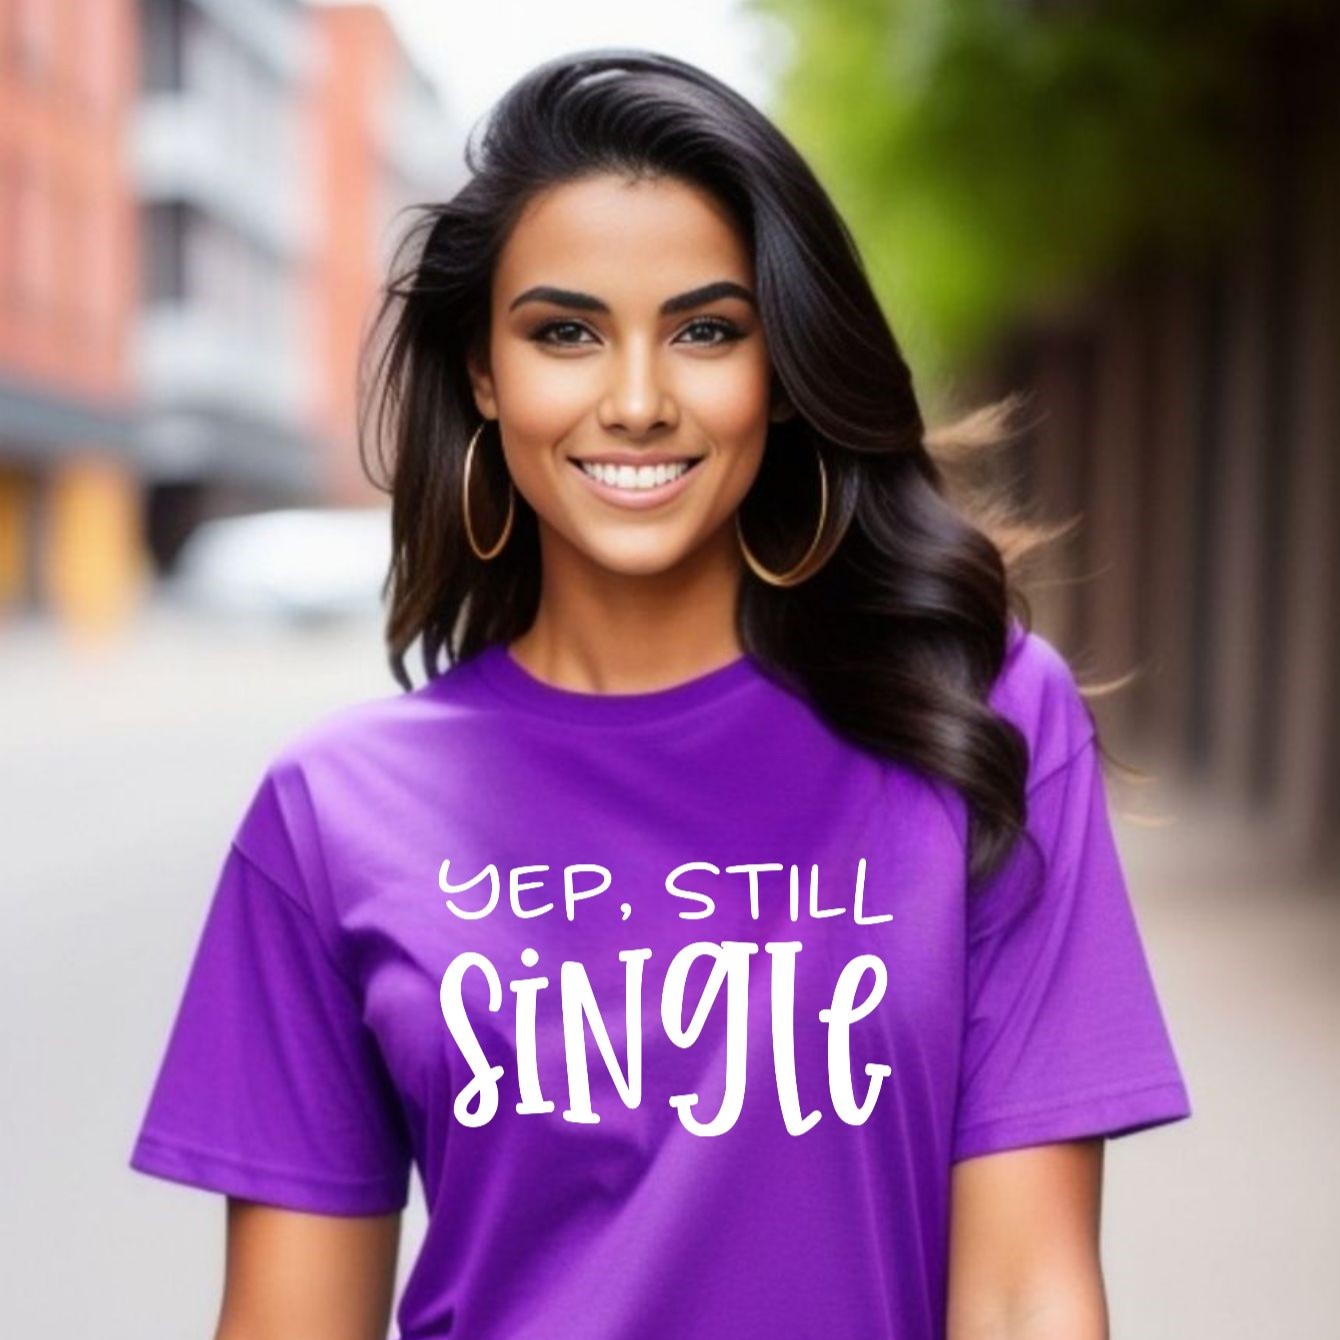 Yep, Still Single (Unisex)